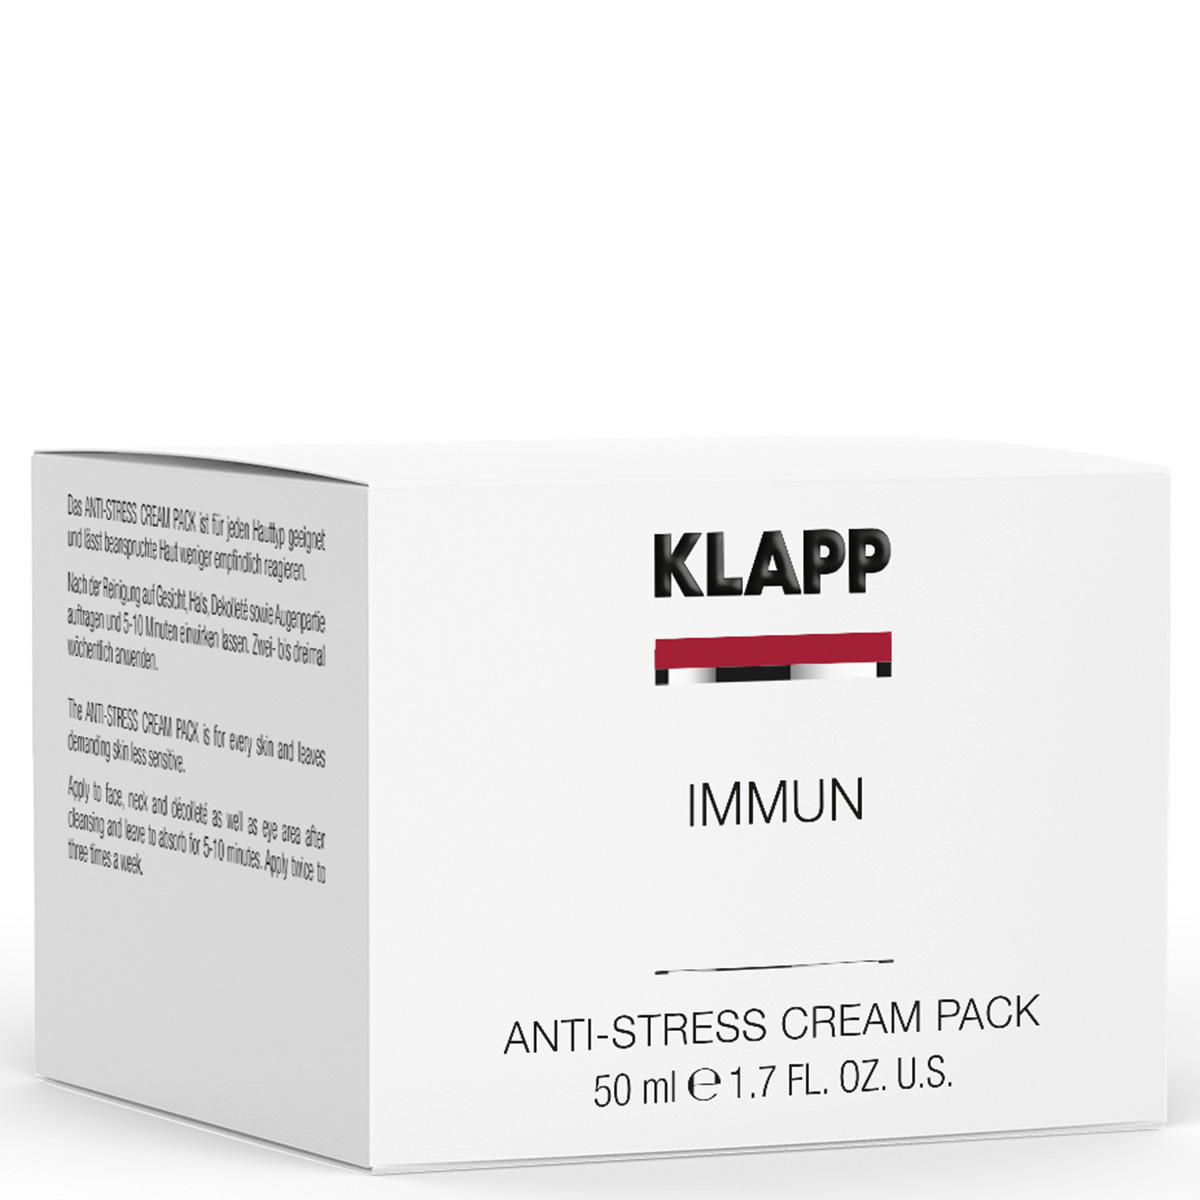 KLAPP IMMUN Anti-Stress Cream Pack 50 ml - 2